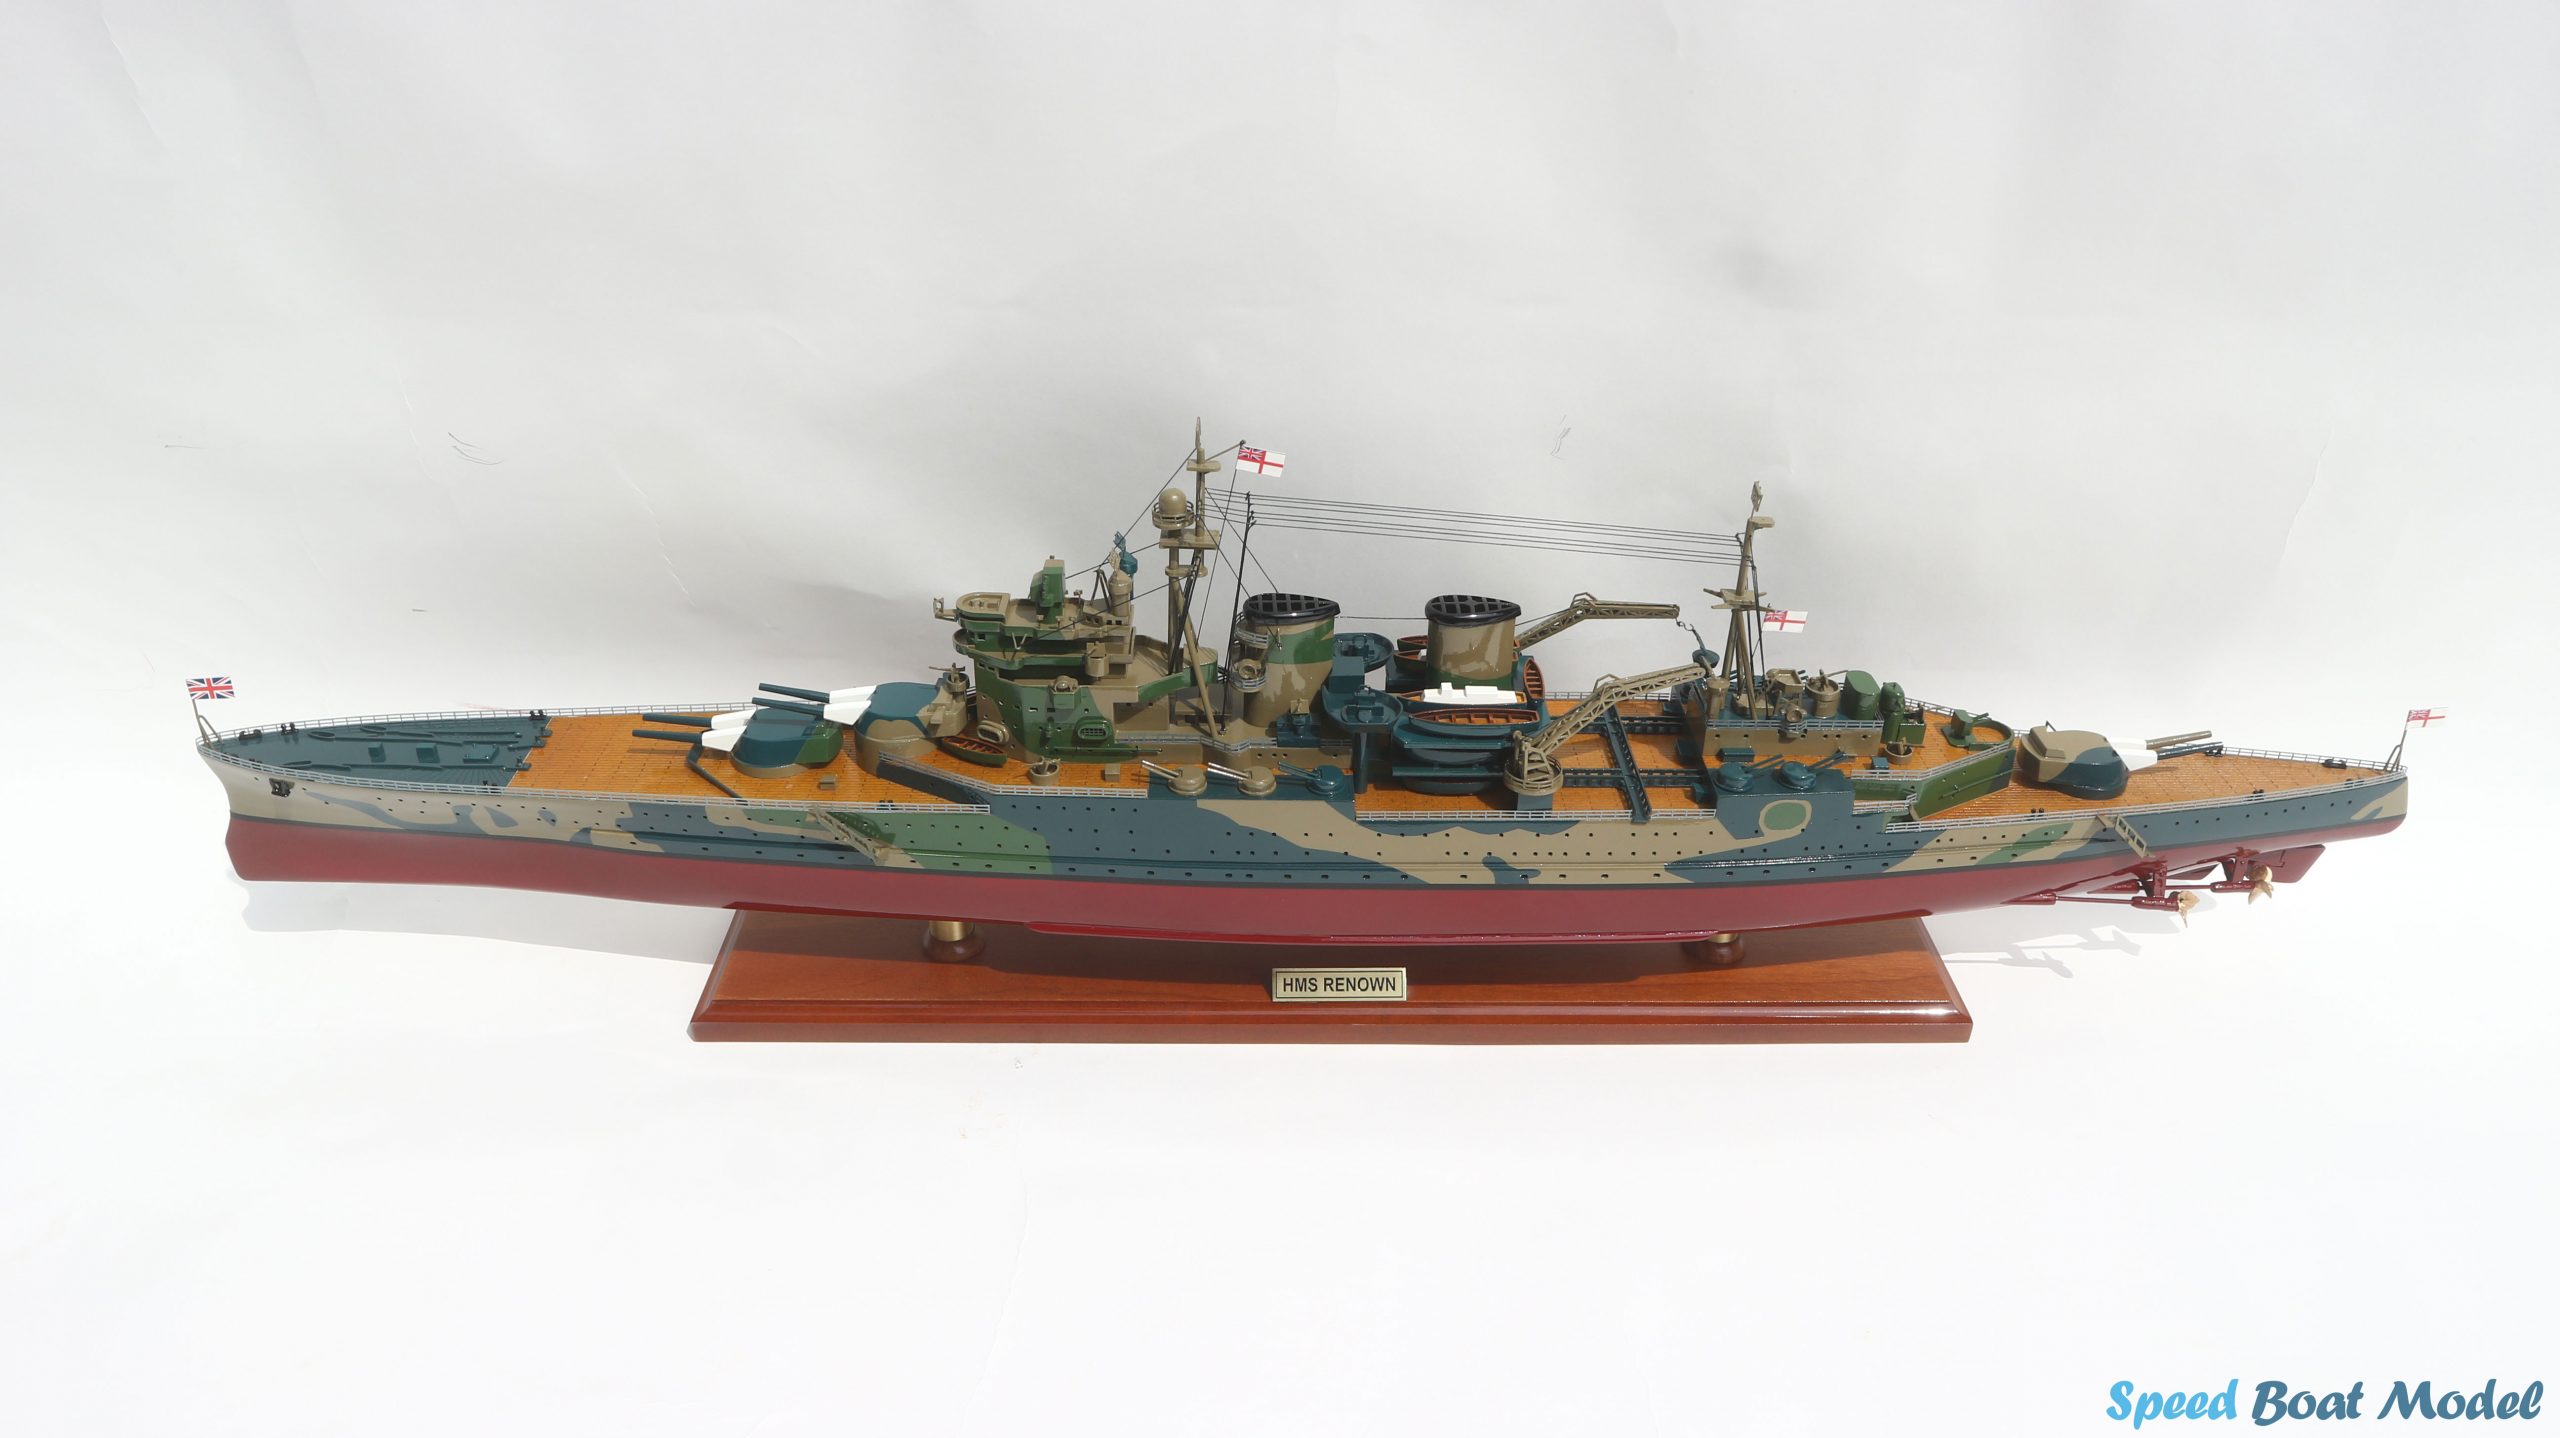 Hms Renown Warship Model 39.7"